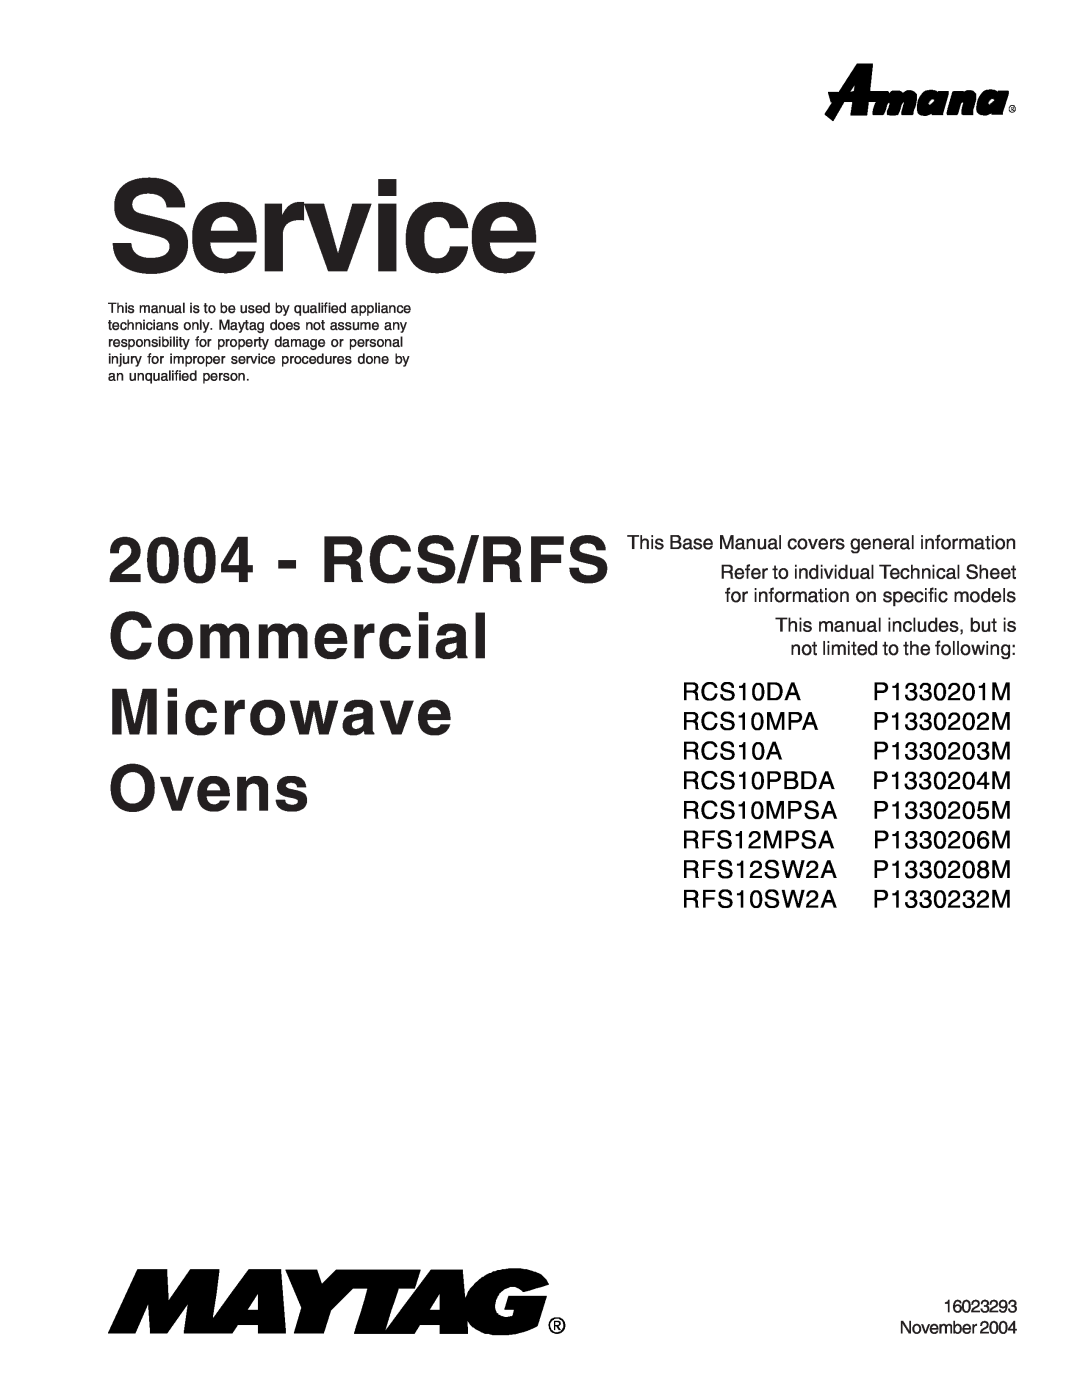 Maytag manual Service, RCS/RFS Commercial Microwave Ovens, RCS10DA P1330201M RCS10MPA P1330202M 